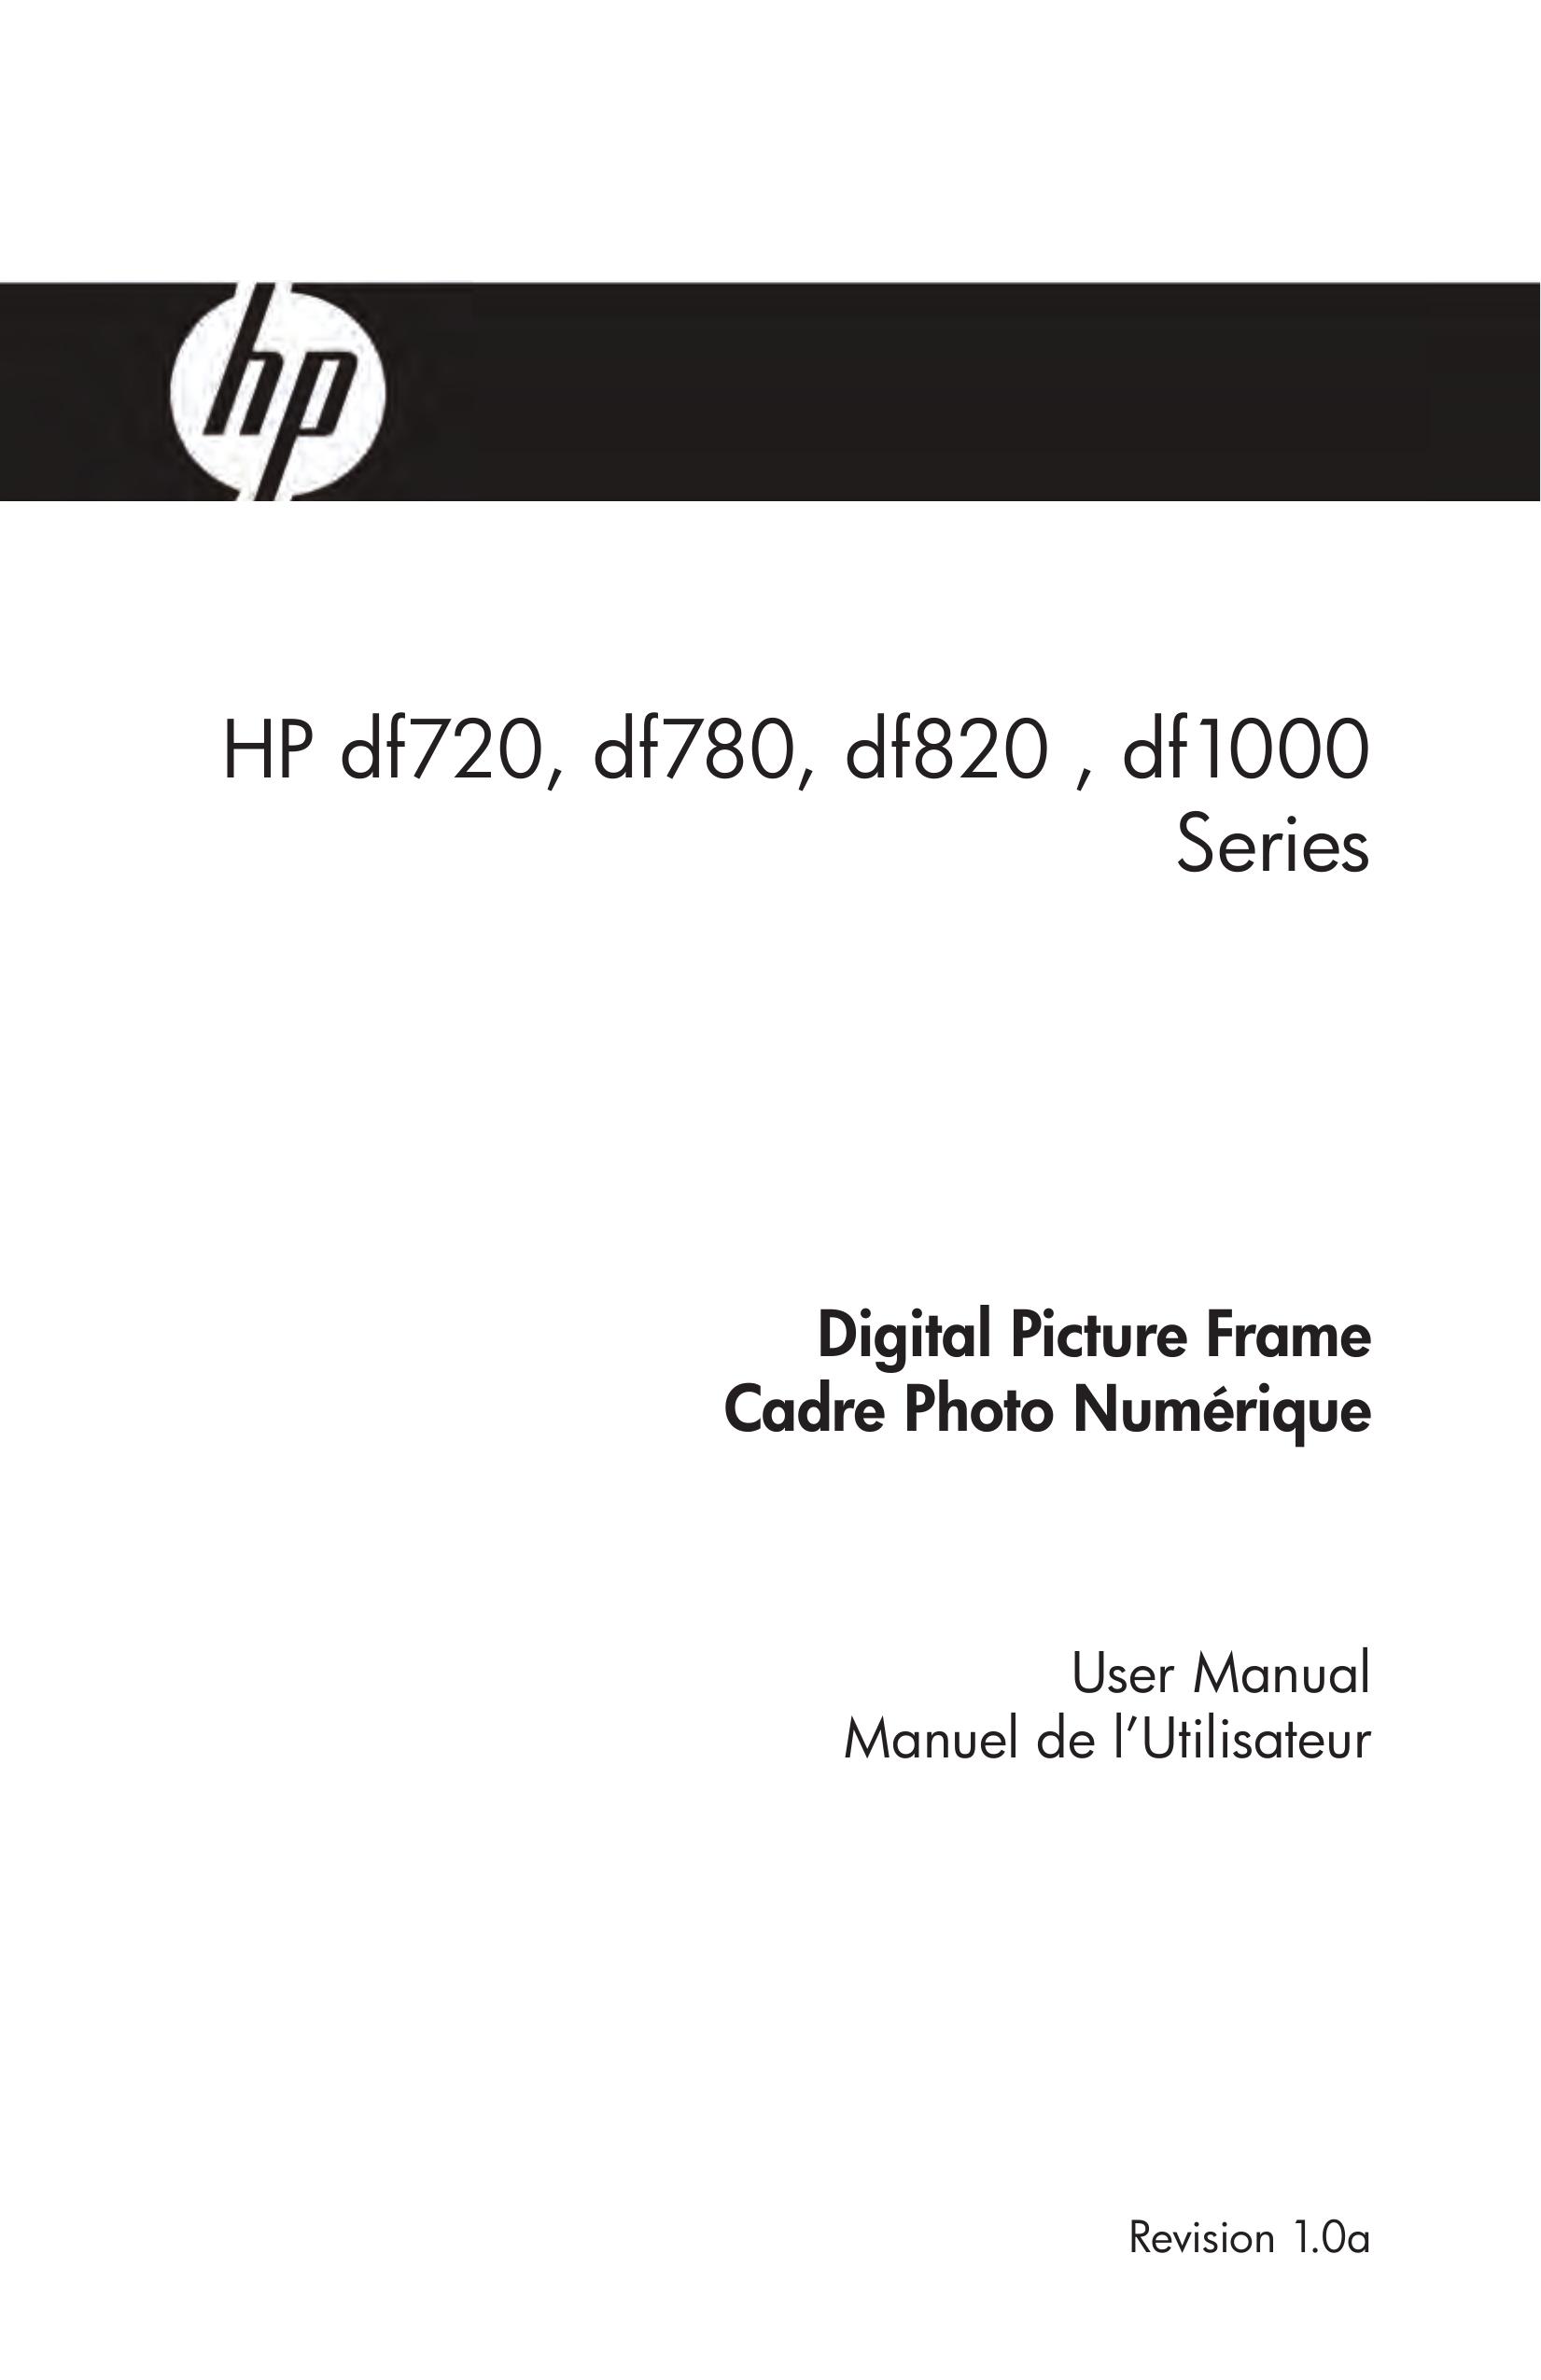 HP (Hewlett-Packard) DF1000 Digital Photo Frame User Manual